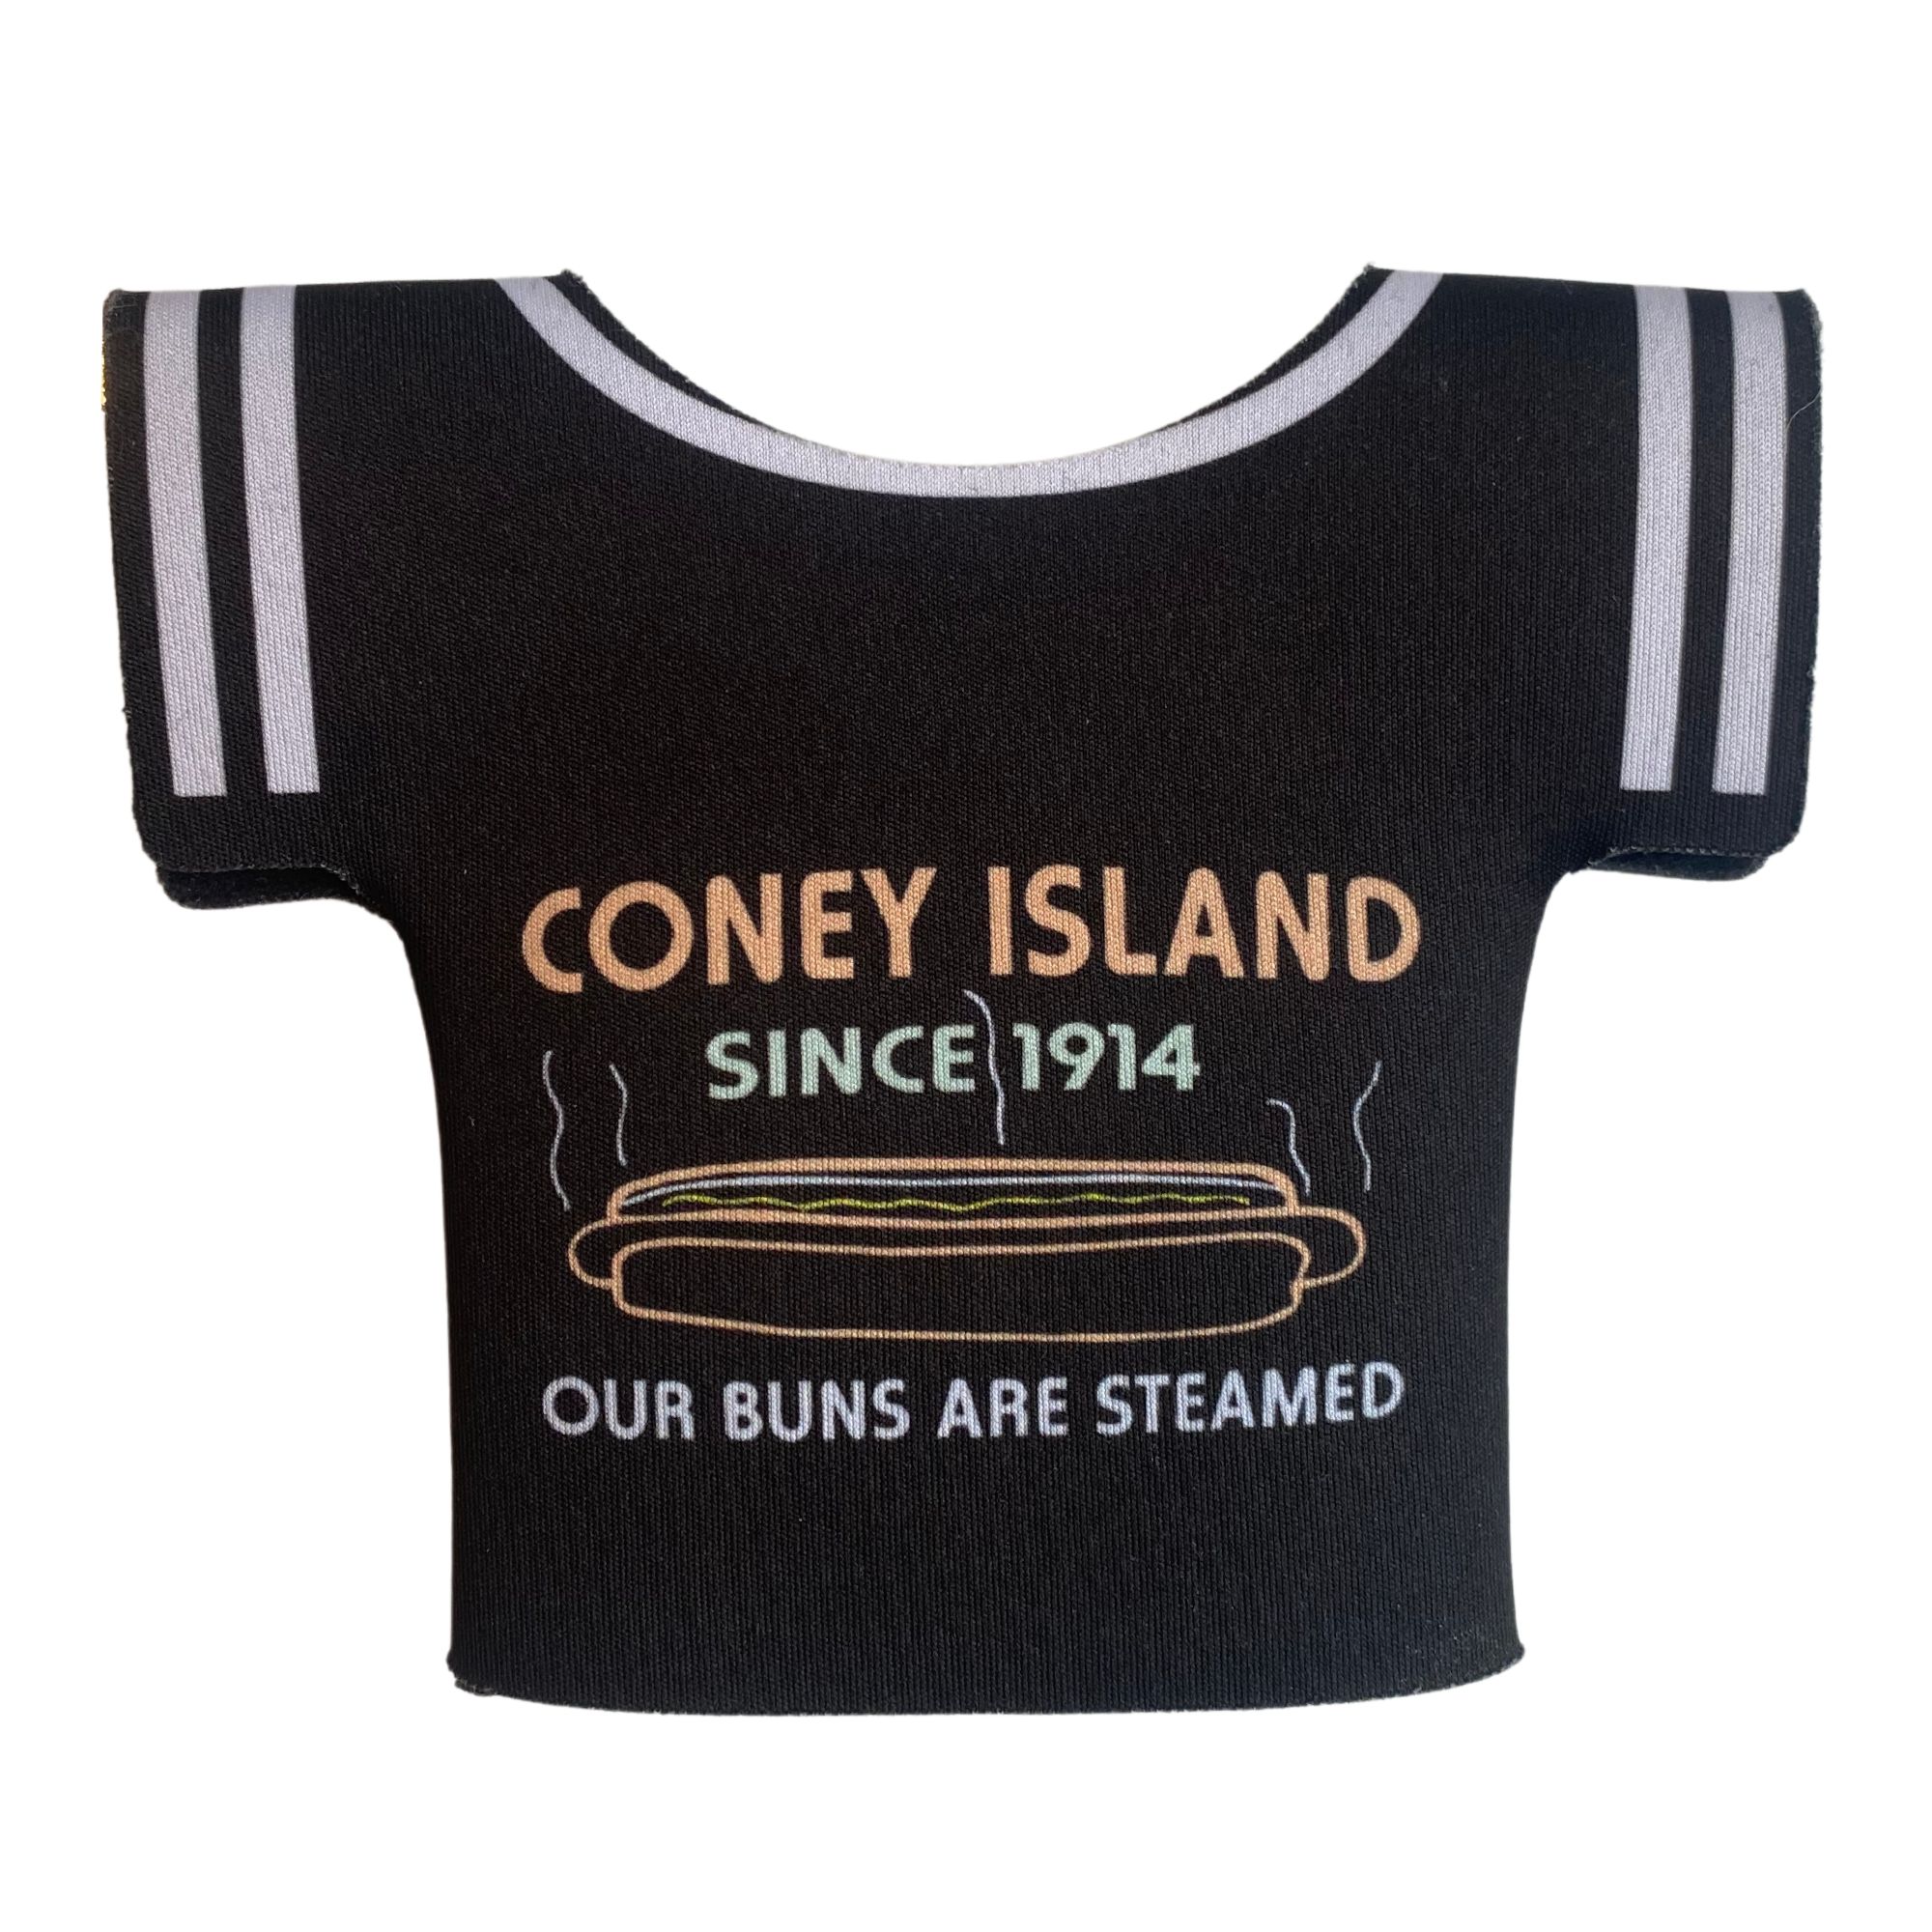 Coney Island Bottle Koozie